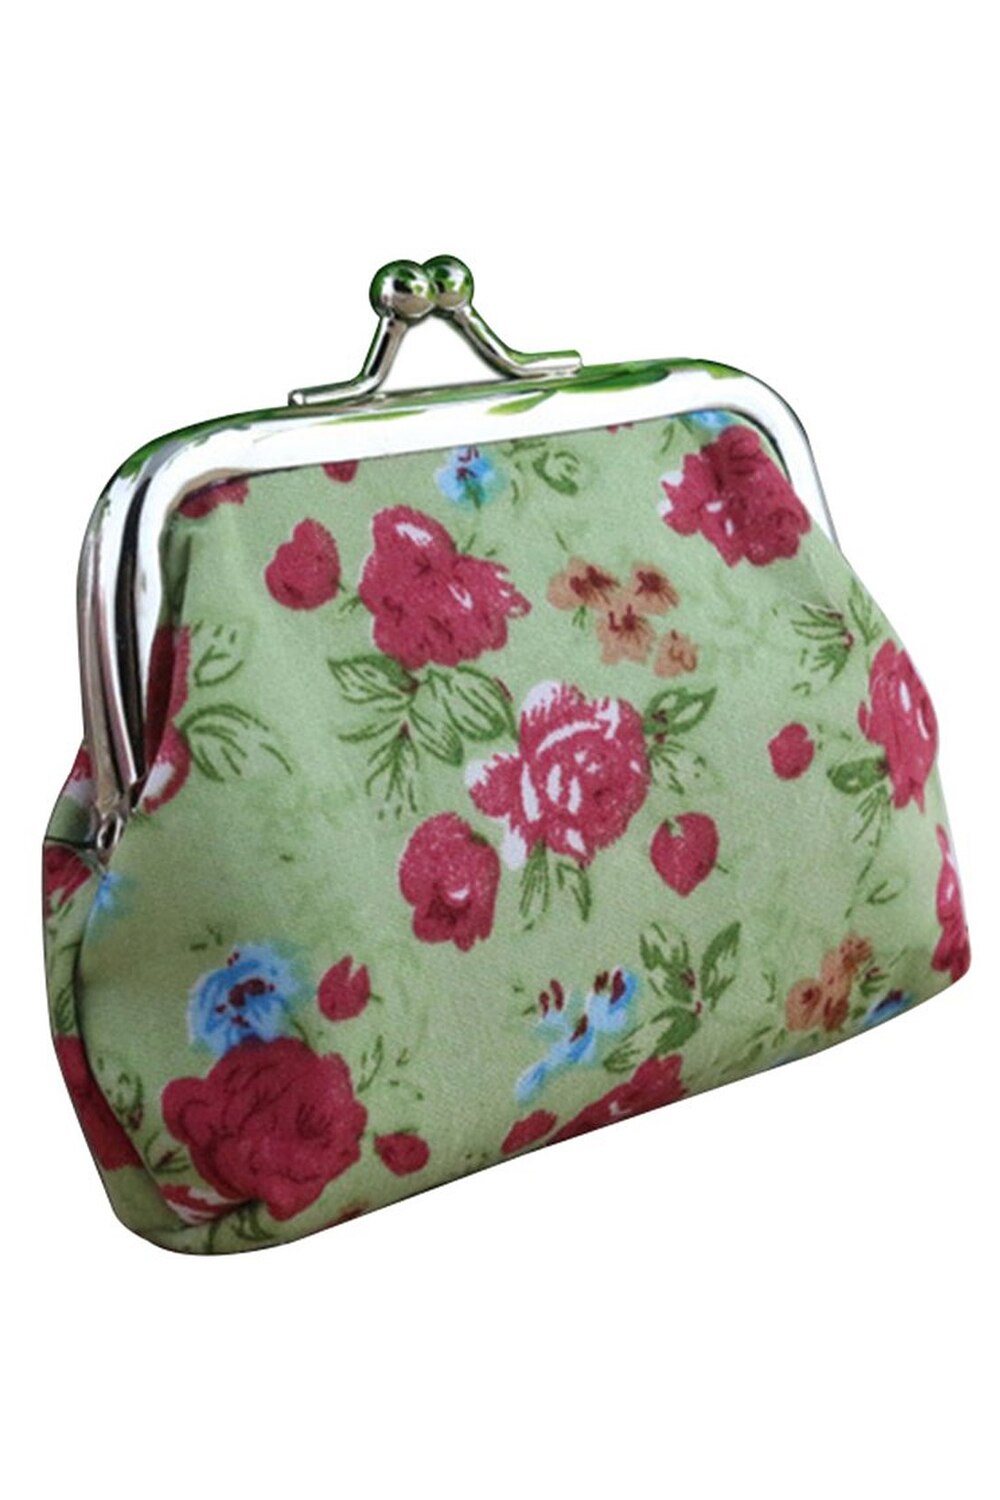 Hot Floral Wallet Bag Keys Pouch Coin Purse - ebowsos